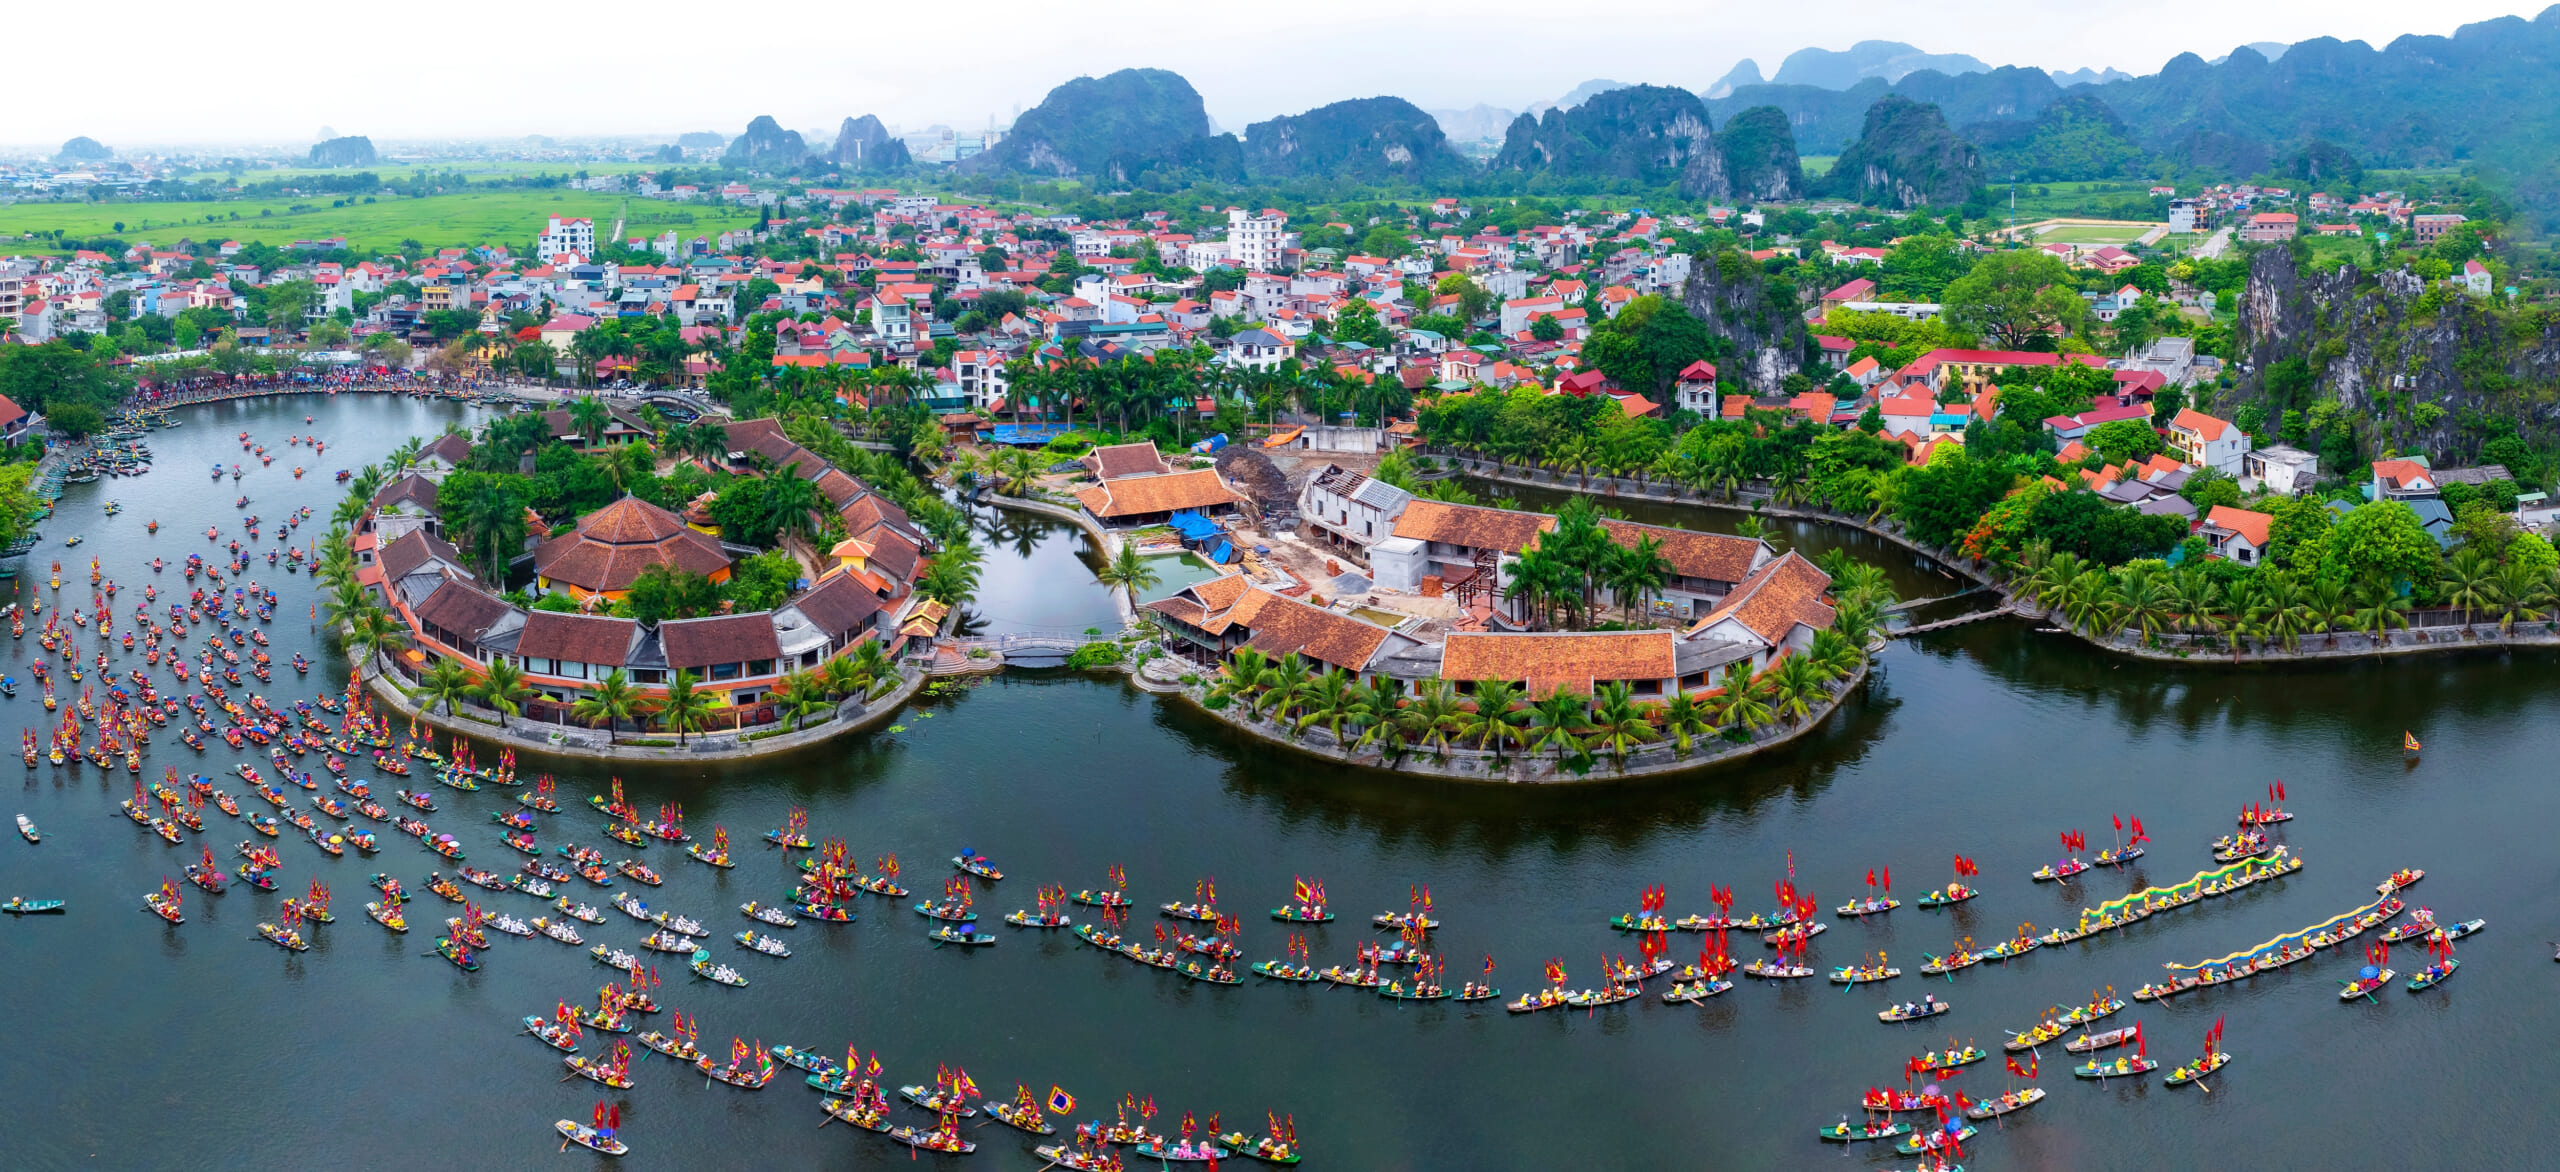 Trang An Complex, Ninh Binh, Vietnam | The UNESCO World Heritage Site